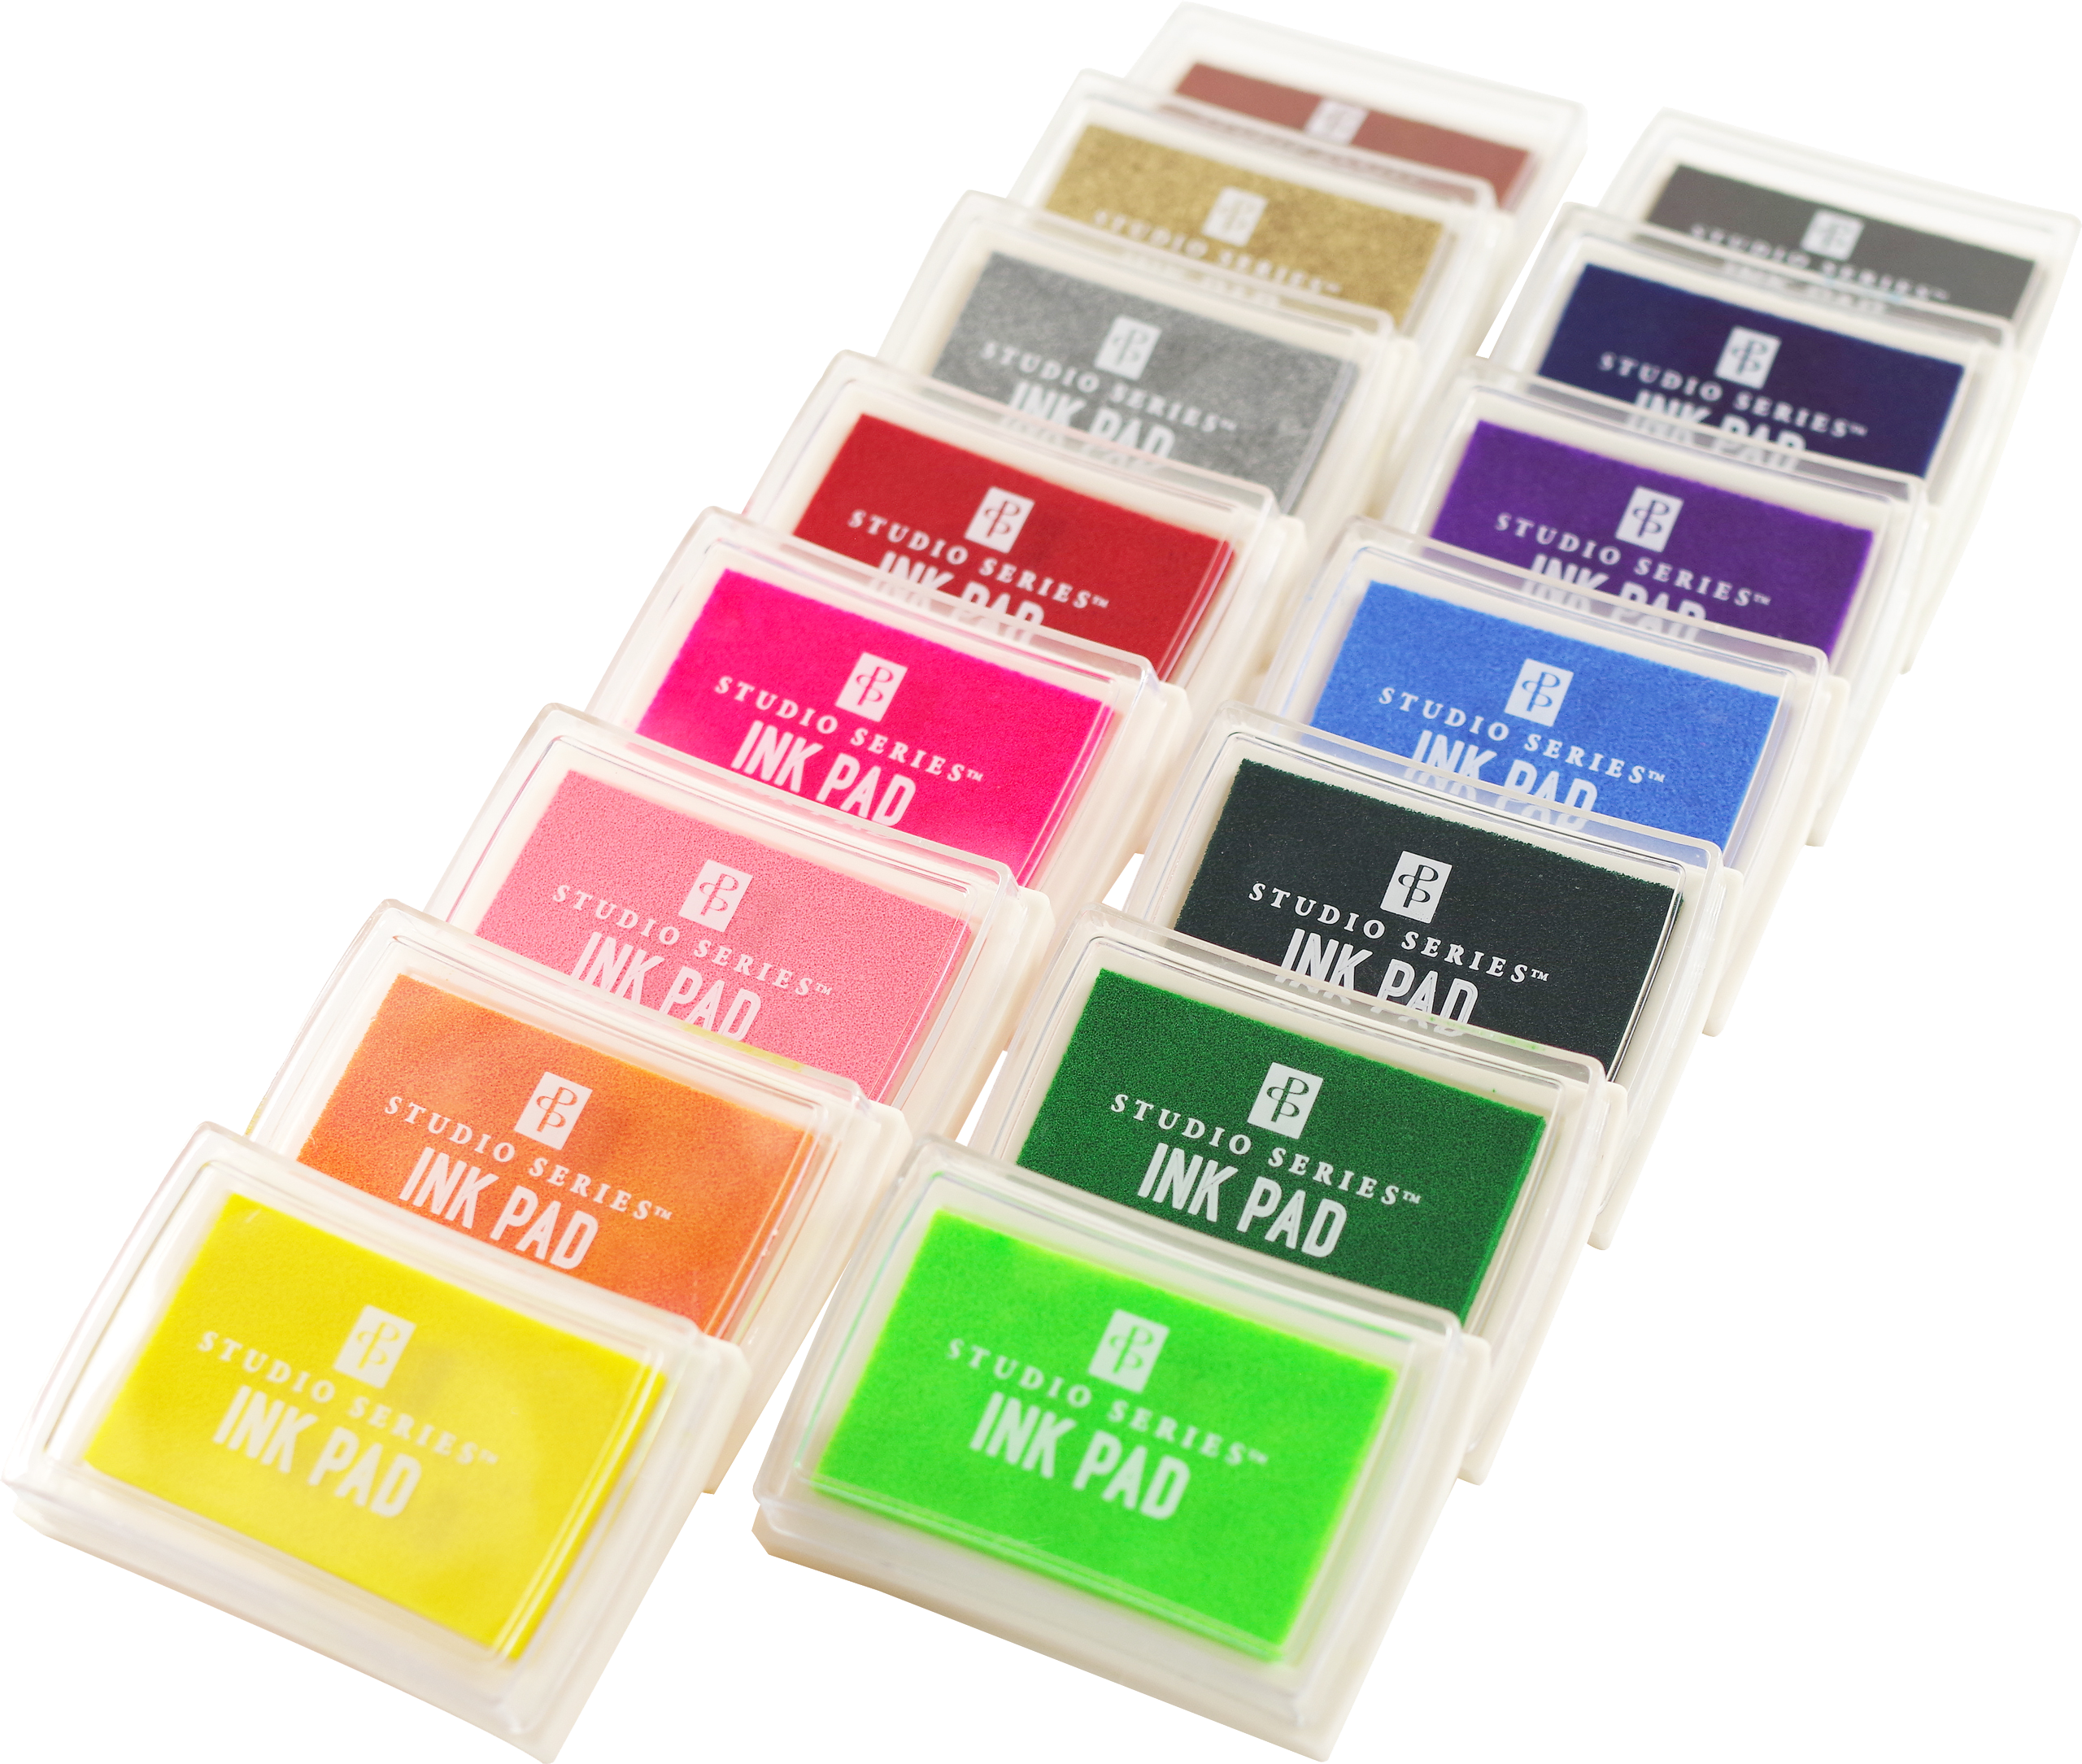 Studio Series Ink Pad Set (15 colors)